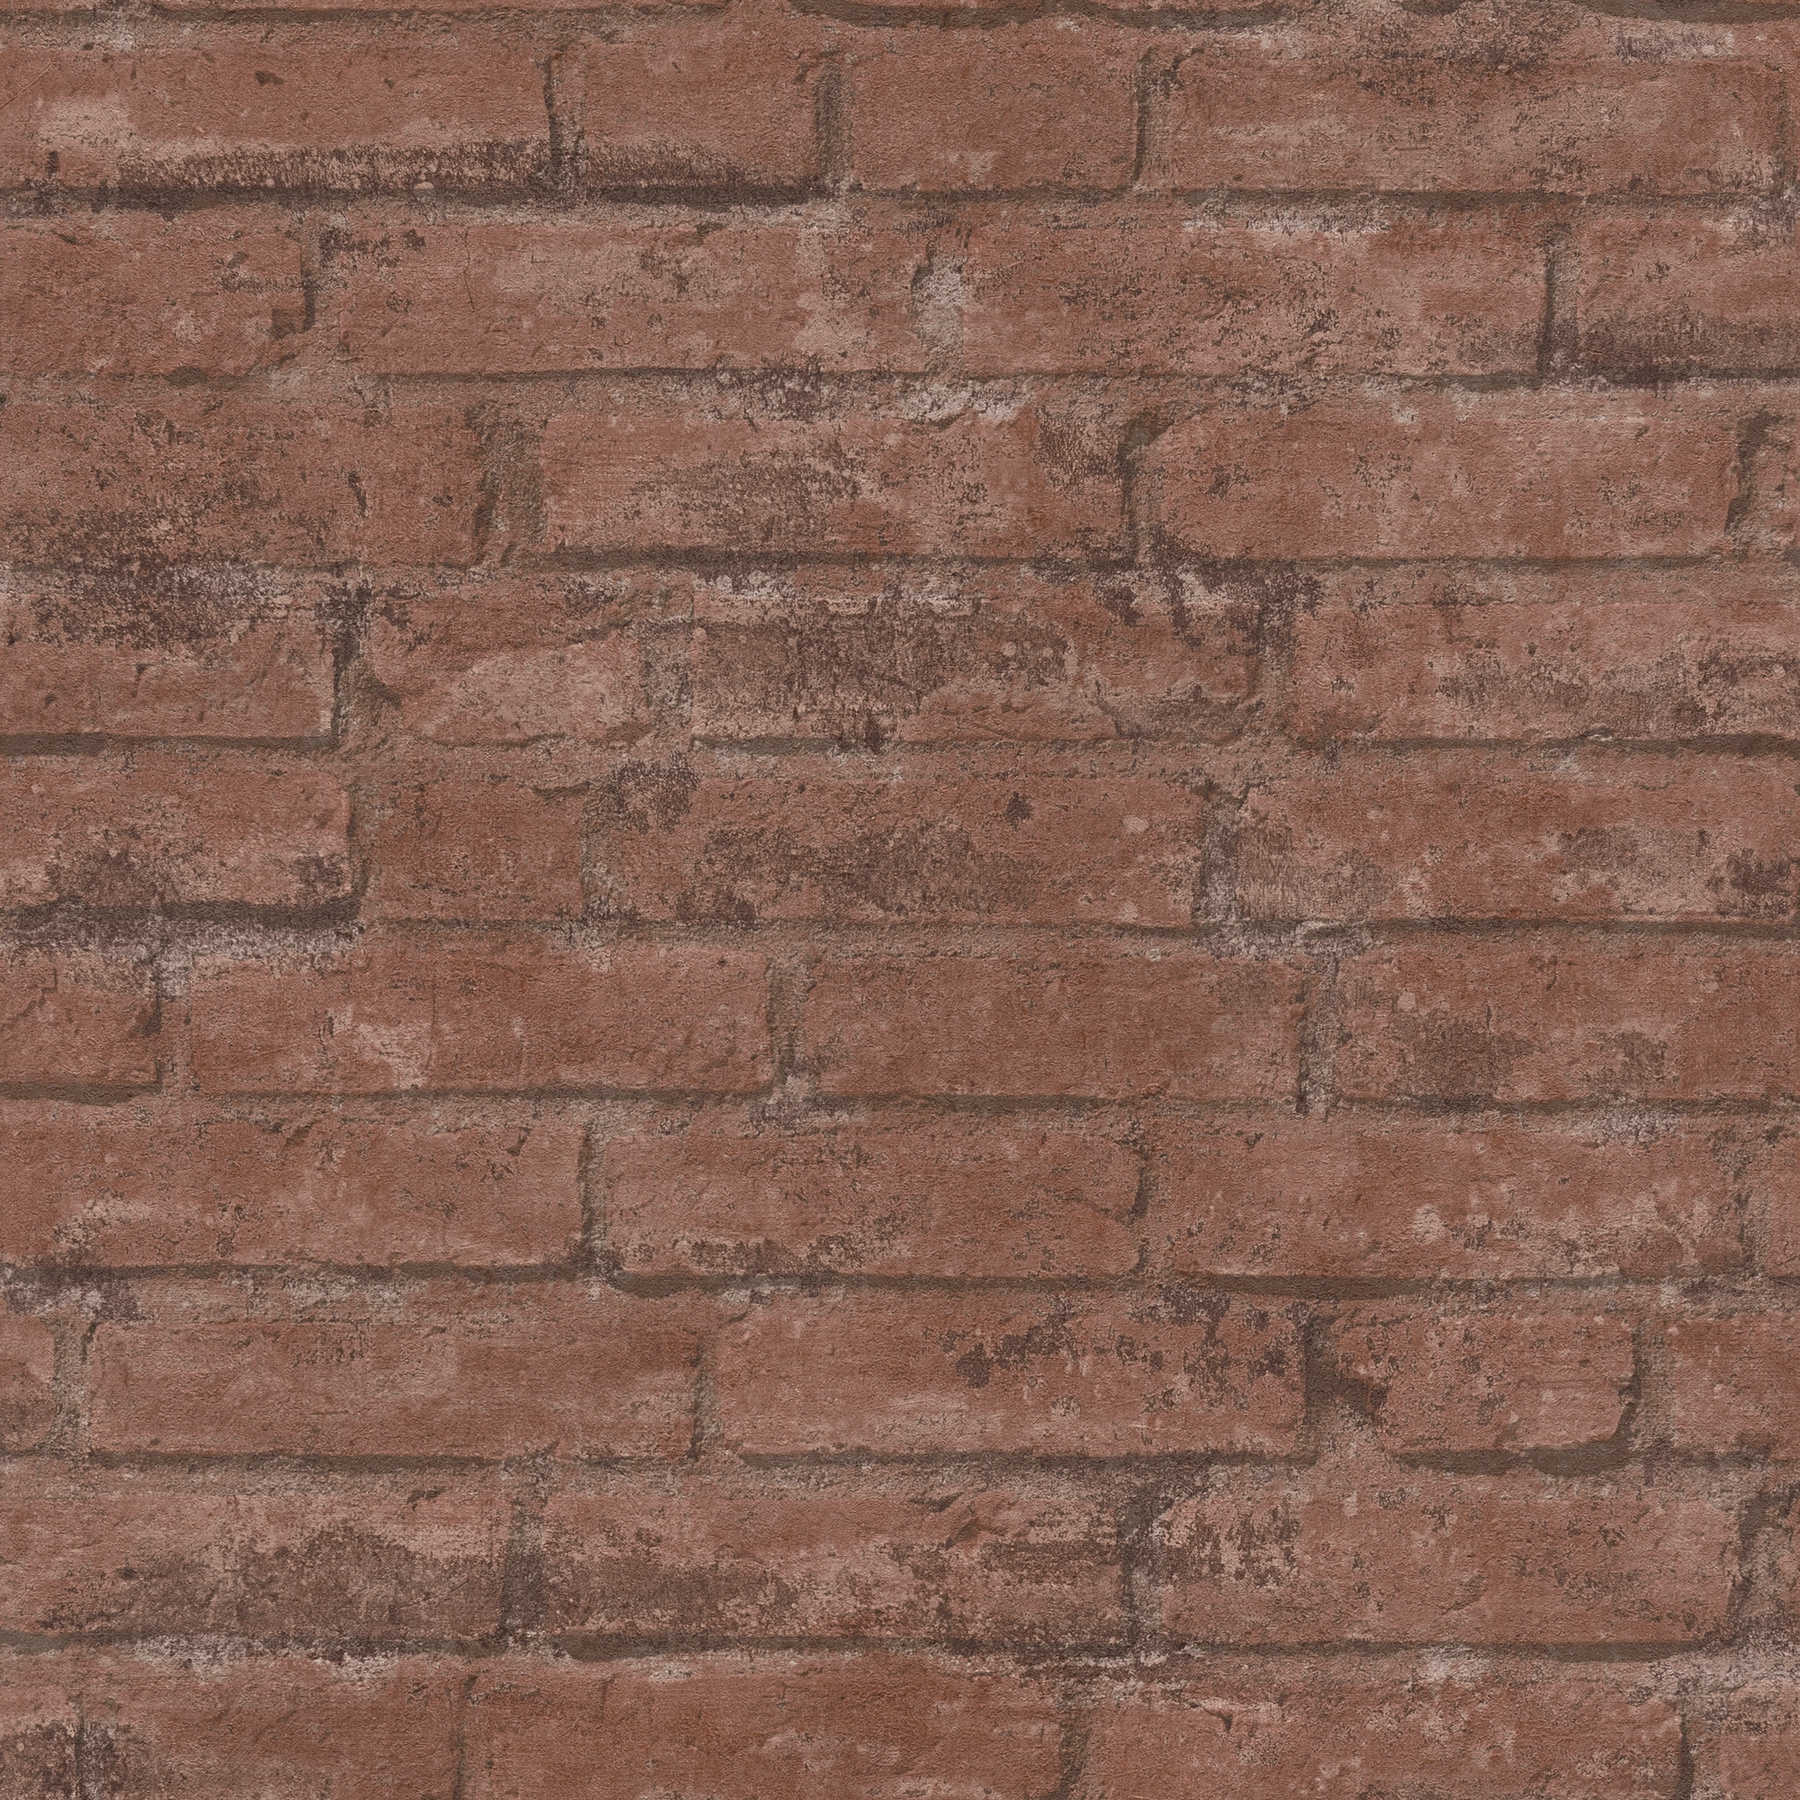 Stone wallpaper rustic wall look, industrial design - brown, red
